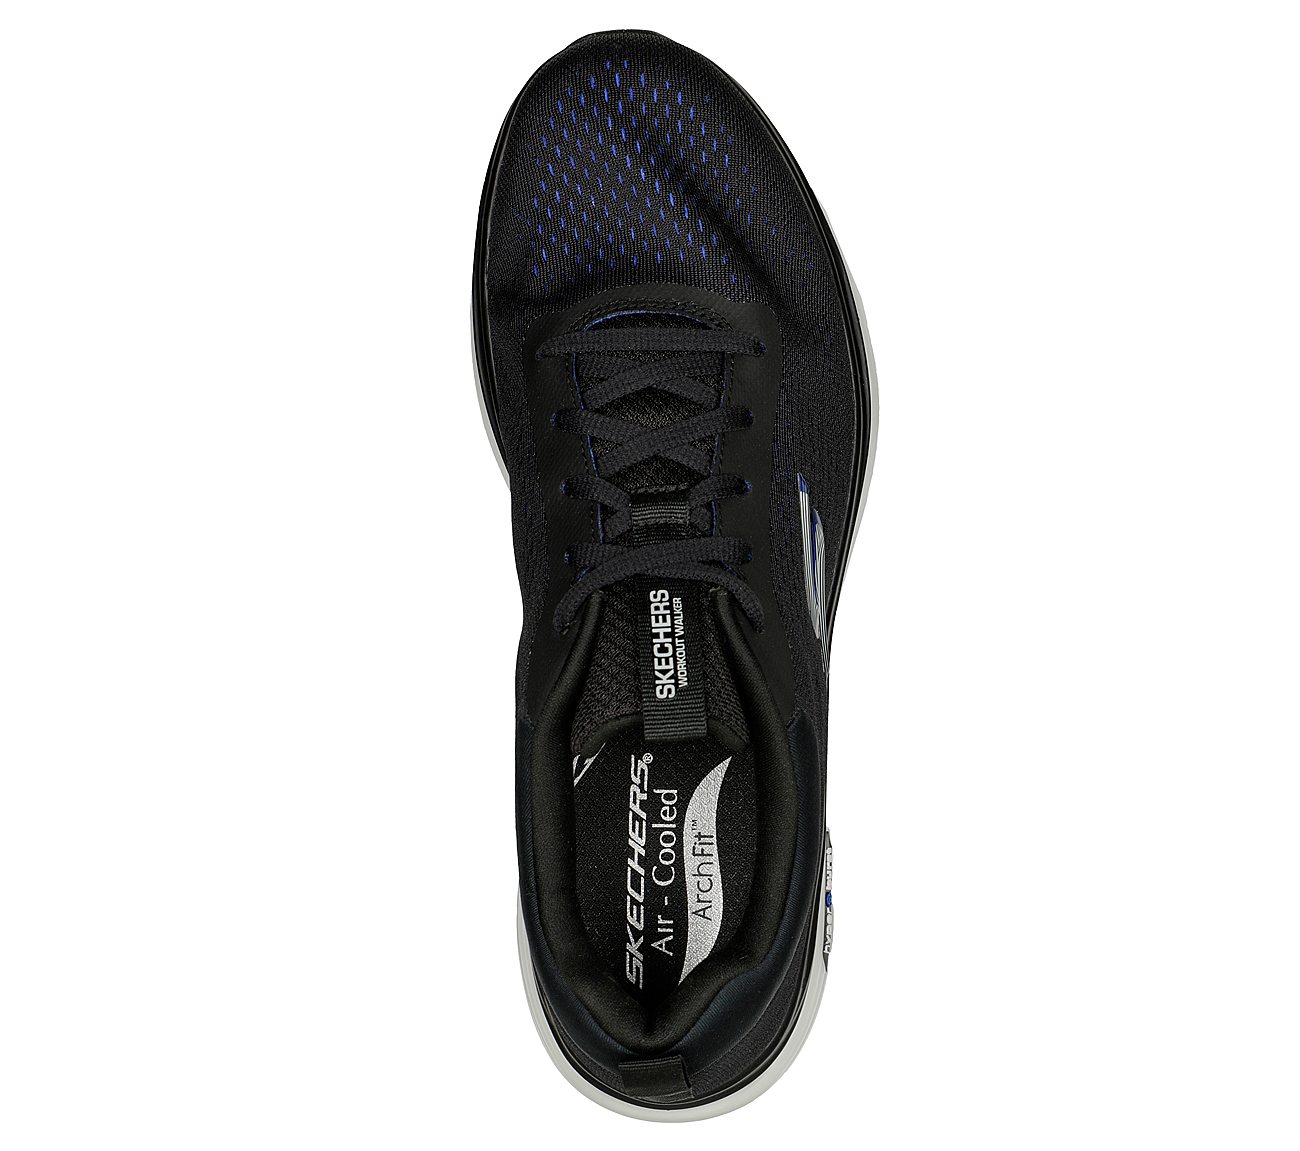 GO WALK WORKOUT WALKER-OUTPAC, BLACK/BLUE Footwear Top View